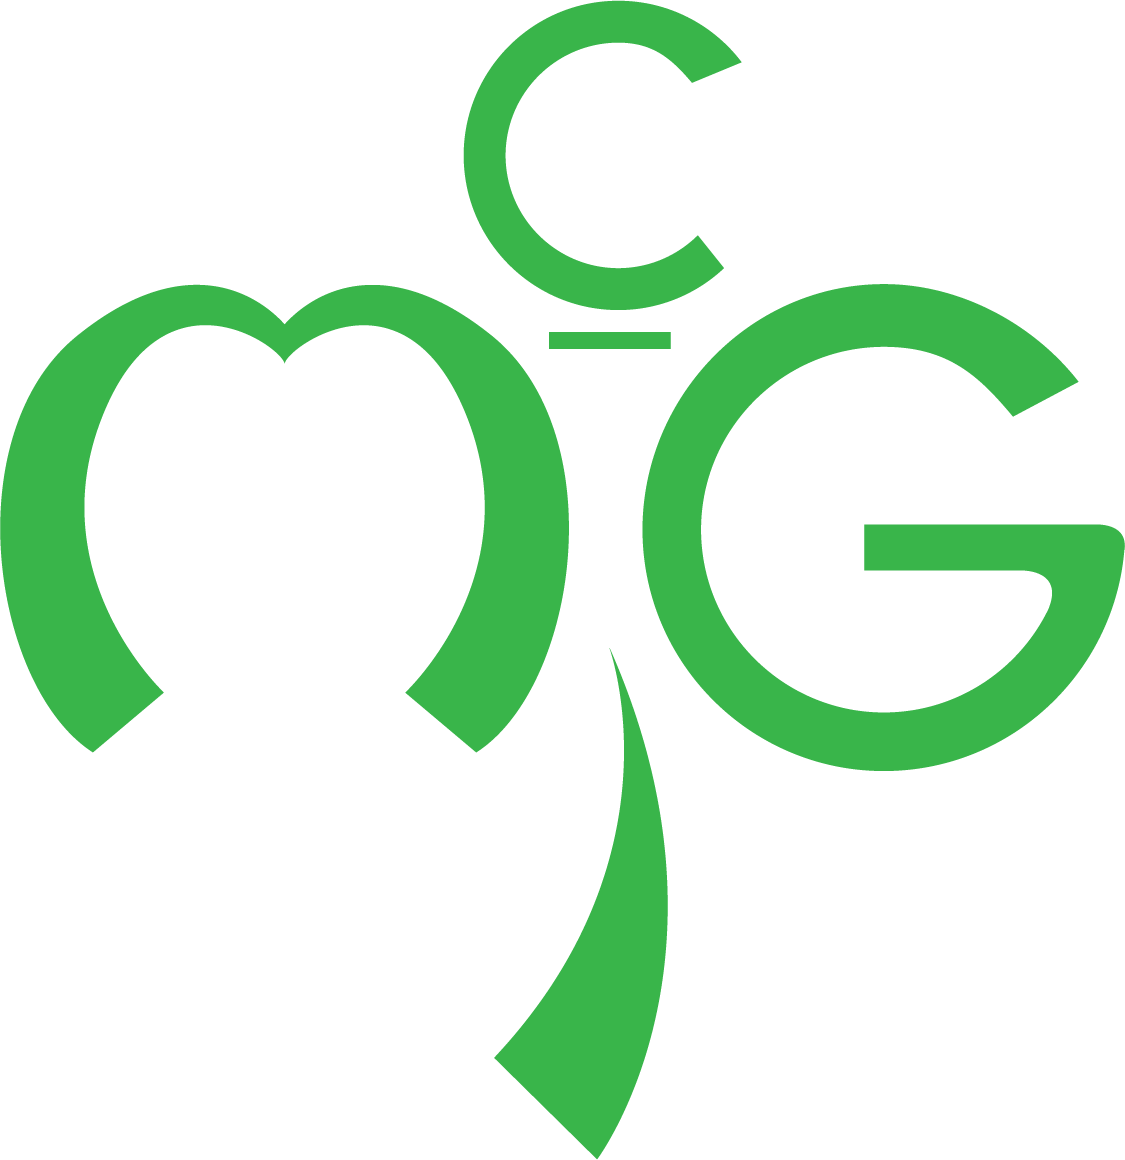 McCusker-Gill green shamrock logo